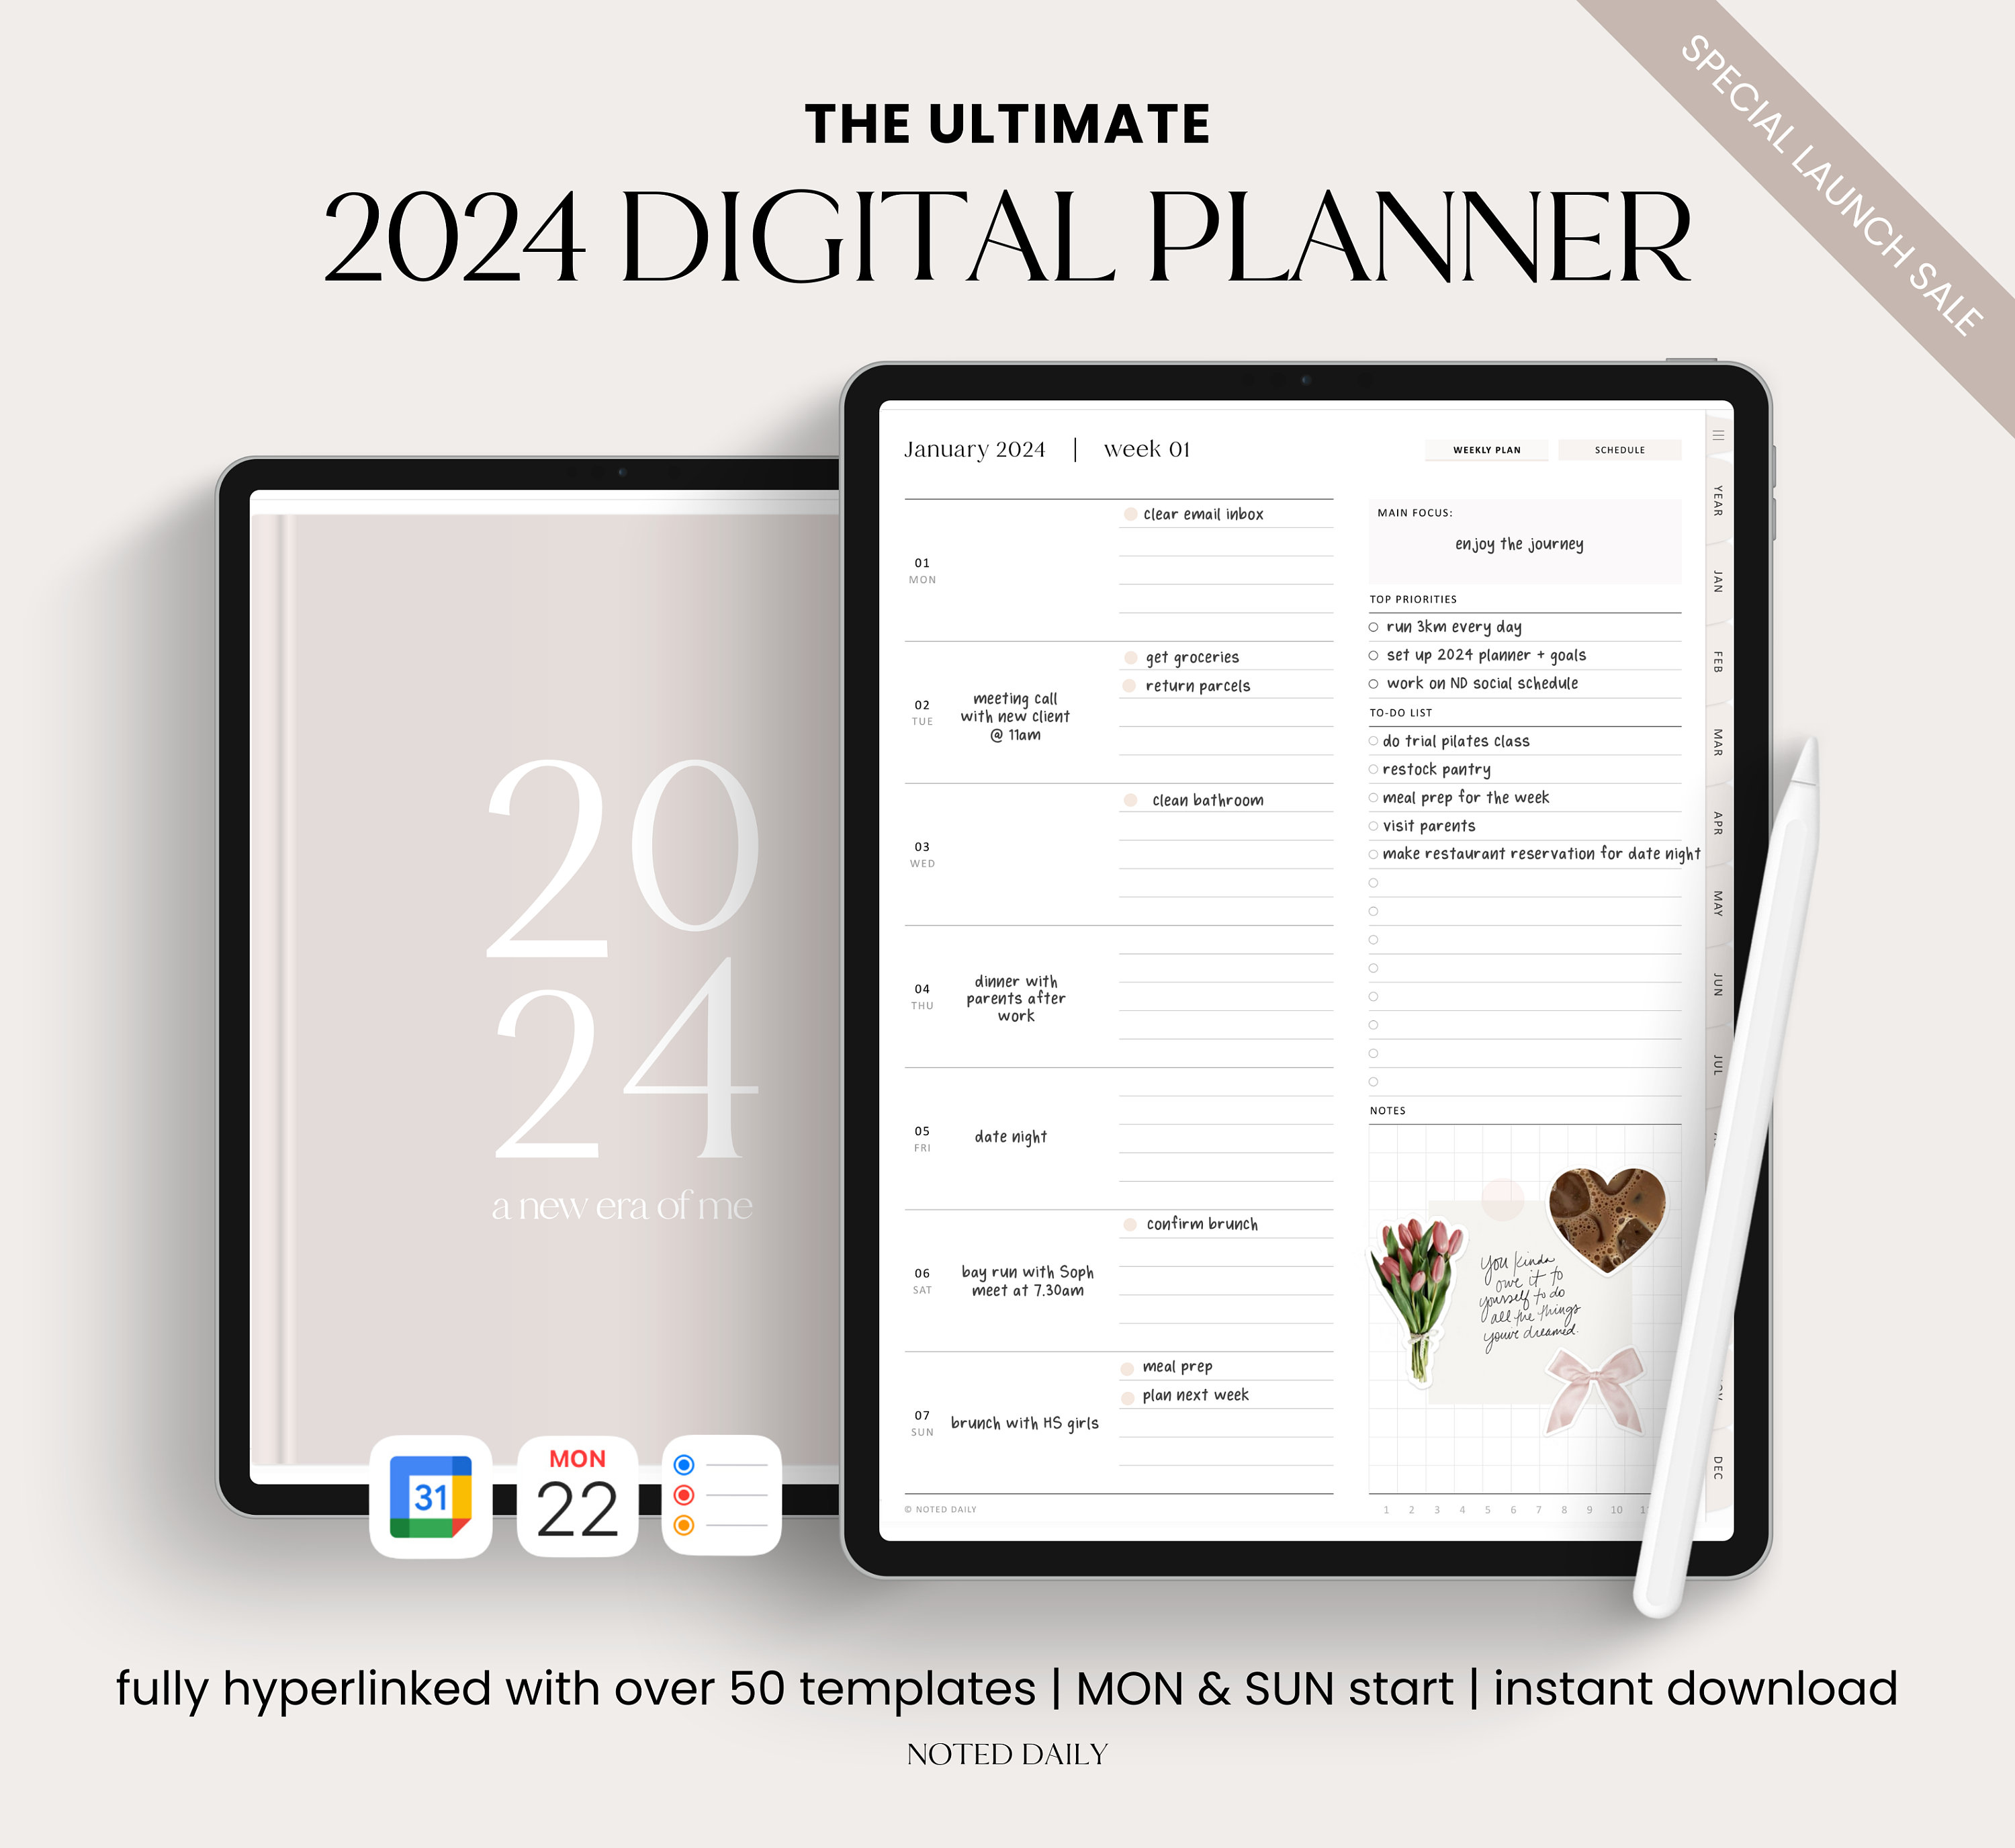 Digital 2024 Classic Planner, for Digital Planning on iPad